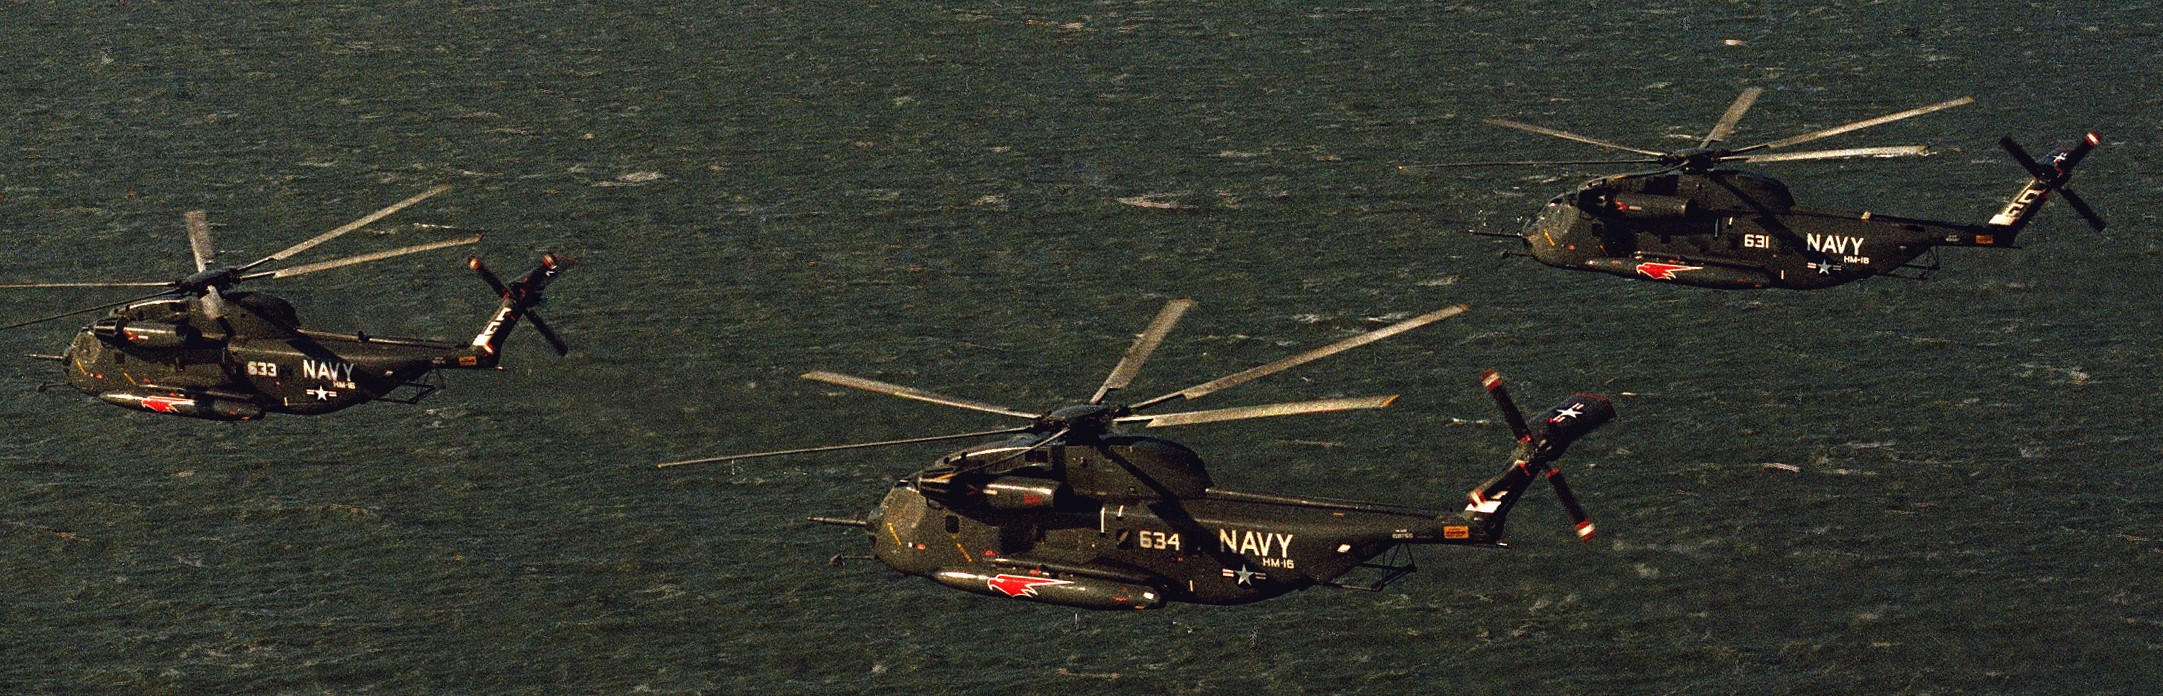 hm-16 seahawks helicopter mine countermeasures squadron navy rh-53d sea stallion 09